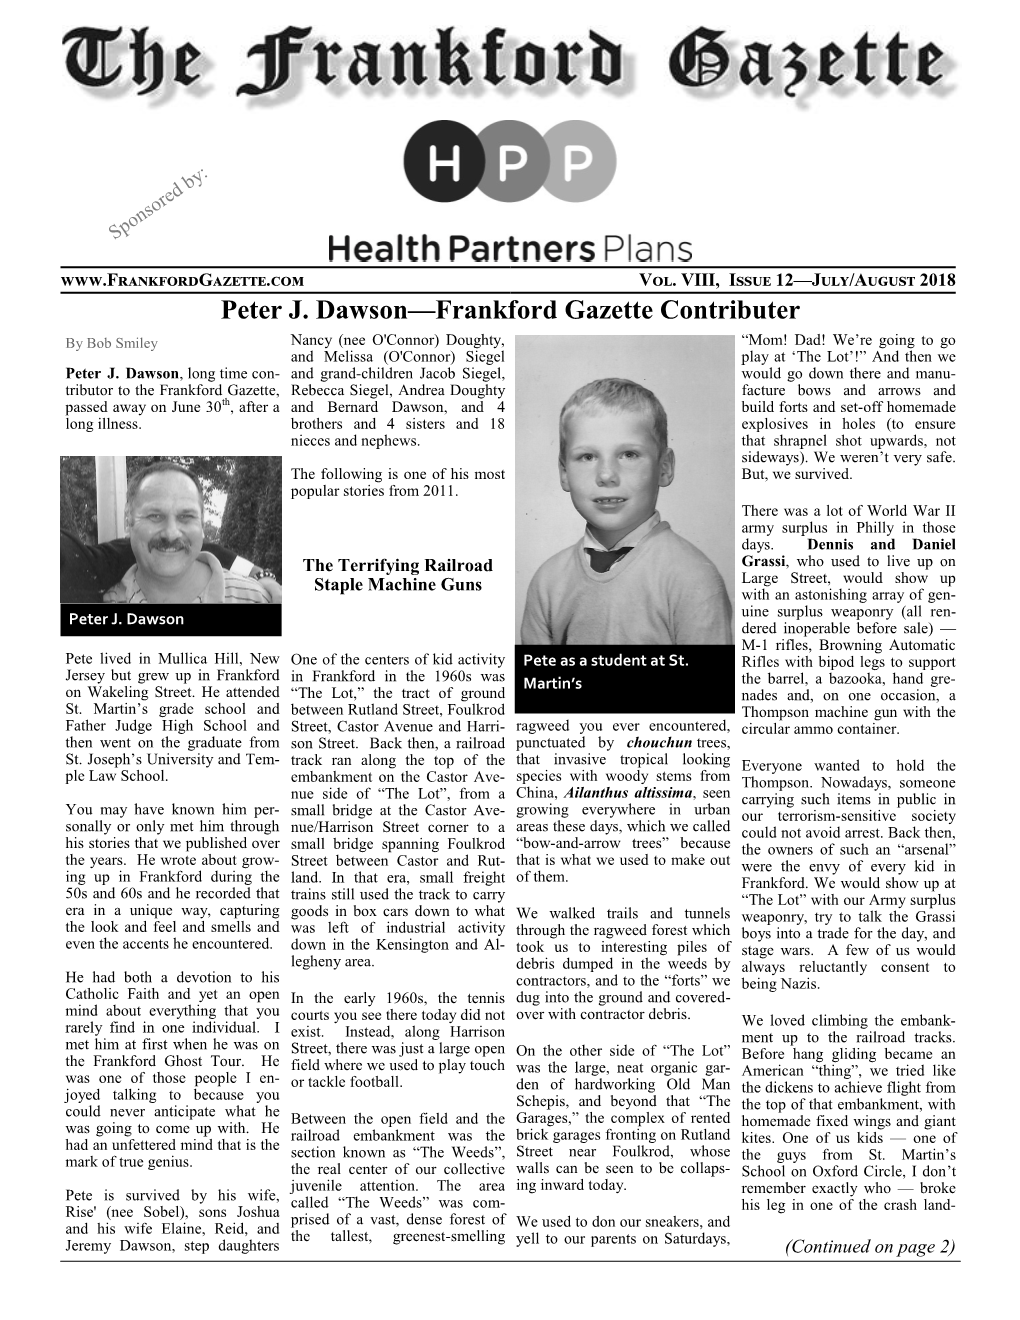 Peter J. Dawson—Frankford Gazette Contributer